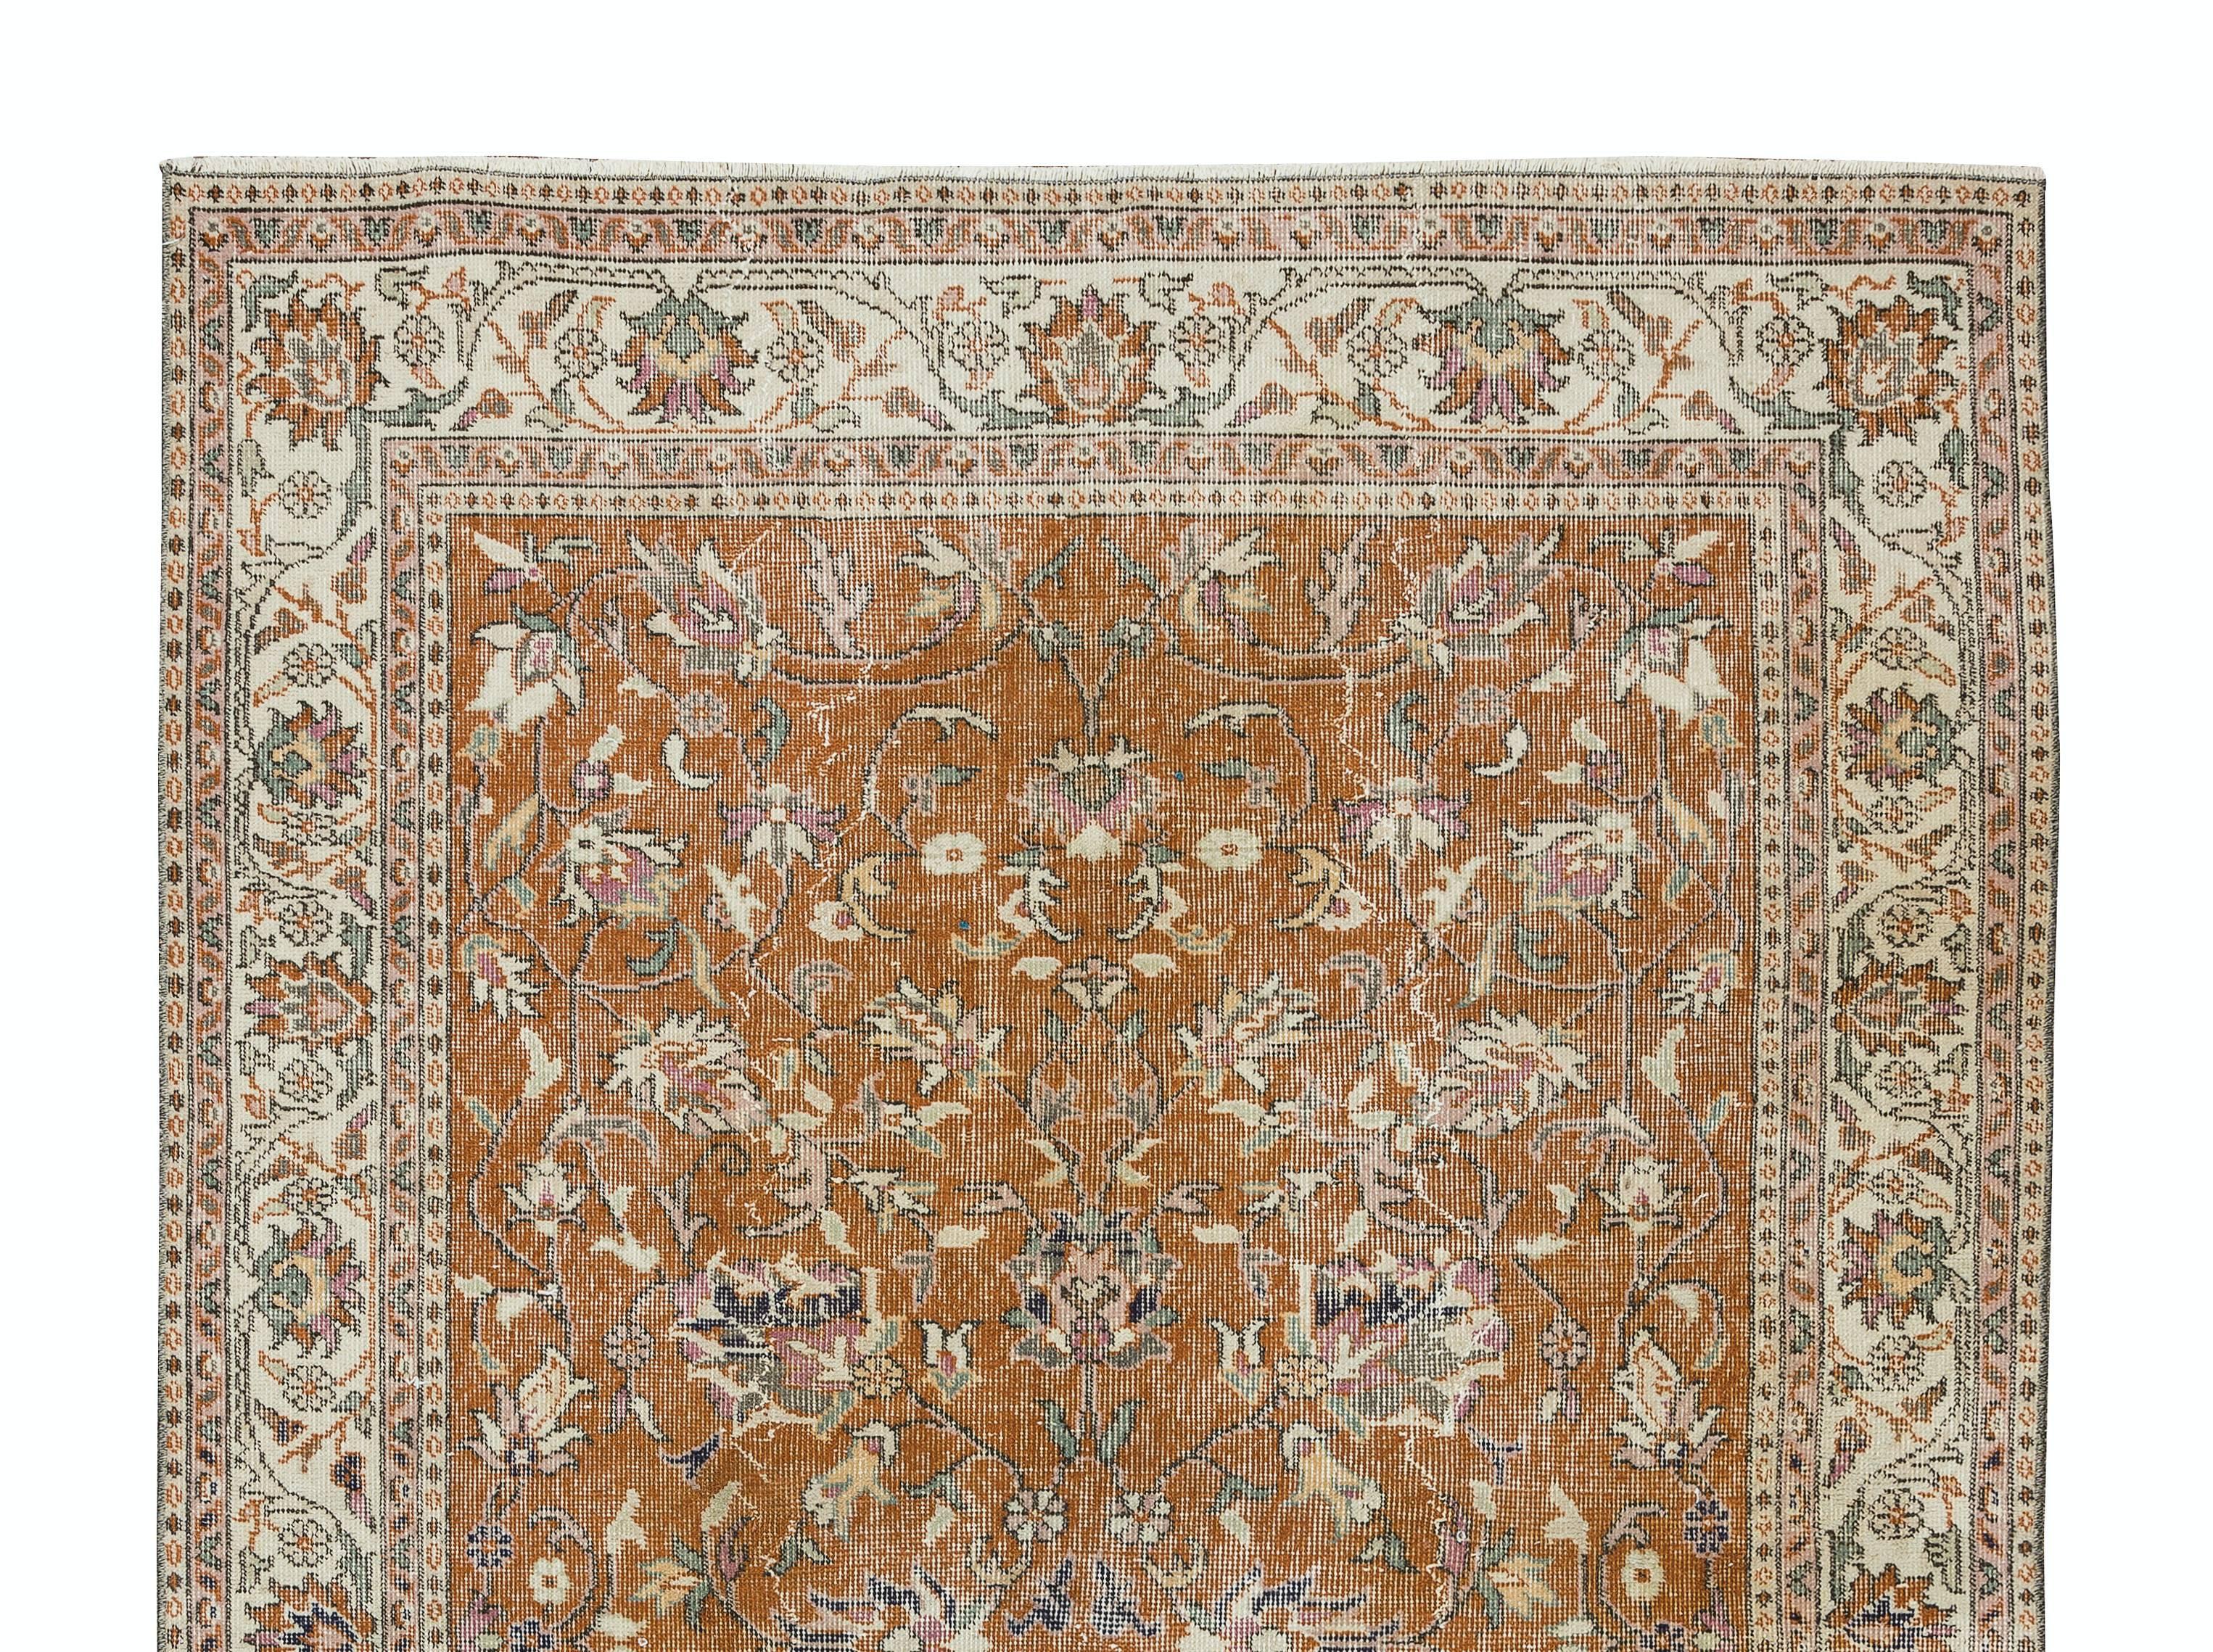 Hand-Woven Vintage Handmade Floral Turkish Wool Area Rug for Living Room Decor